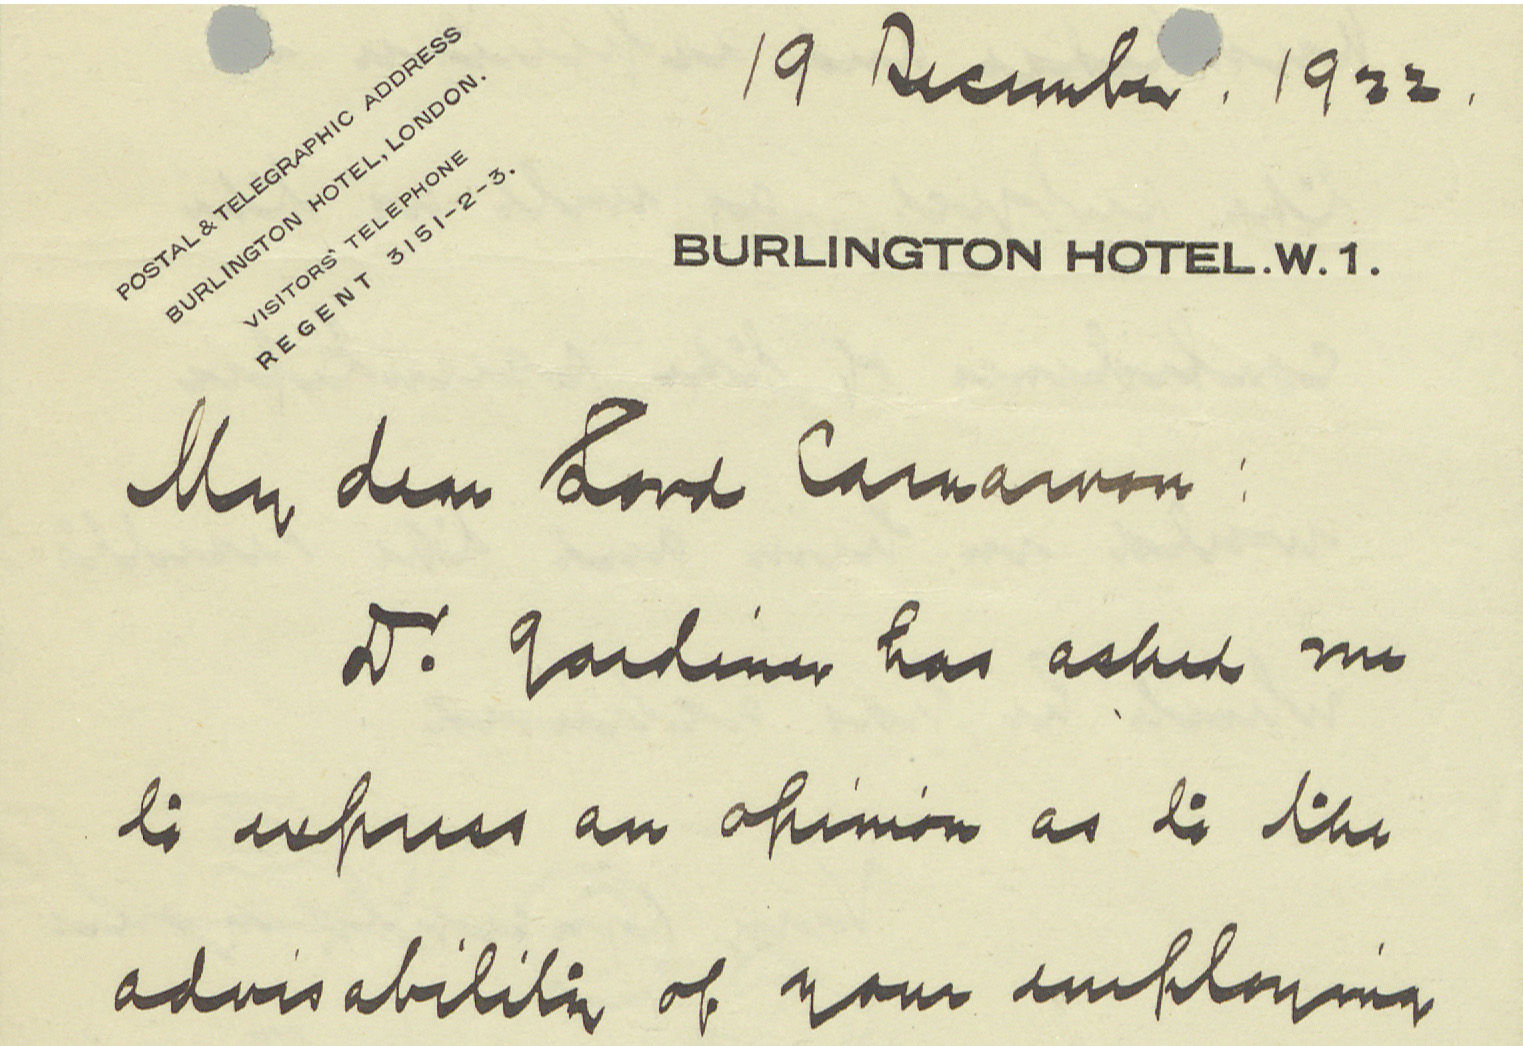 Detail of a handwritten letter dated 19 December, 1922 written on Burlington Hotel stationary